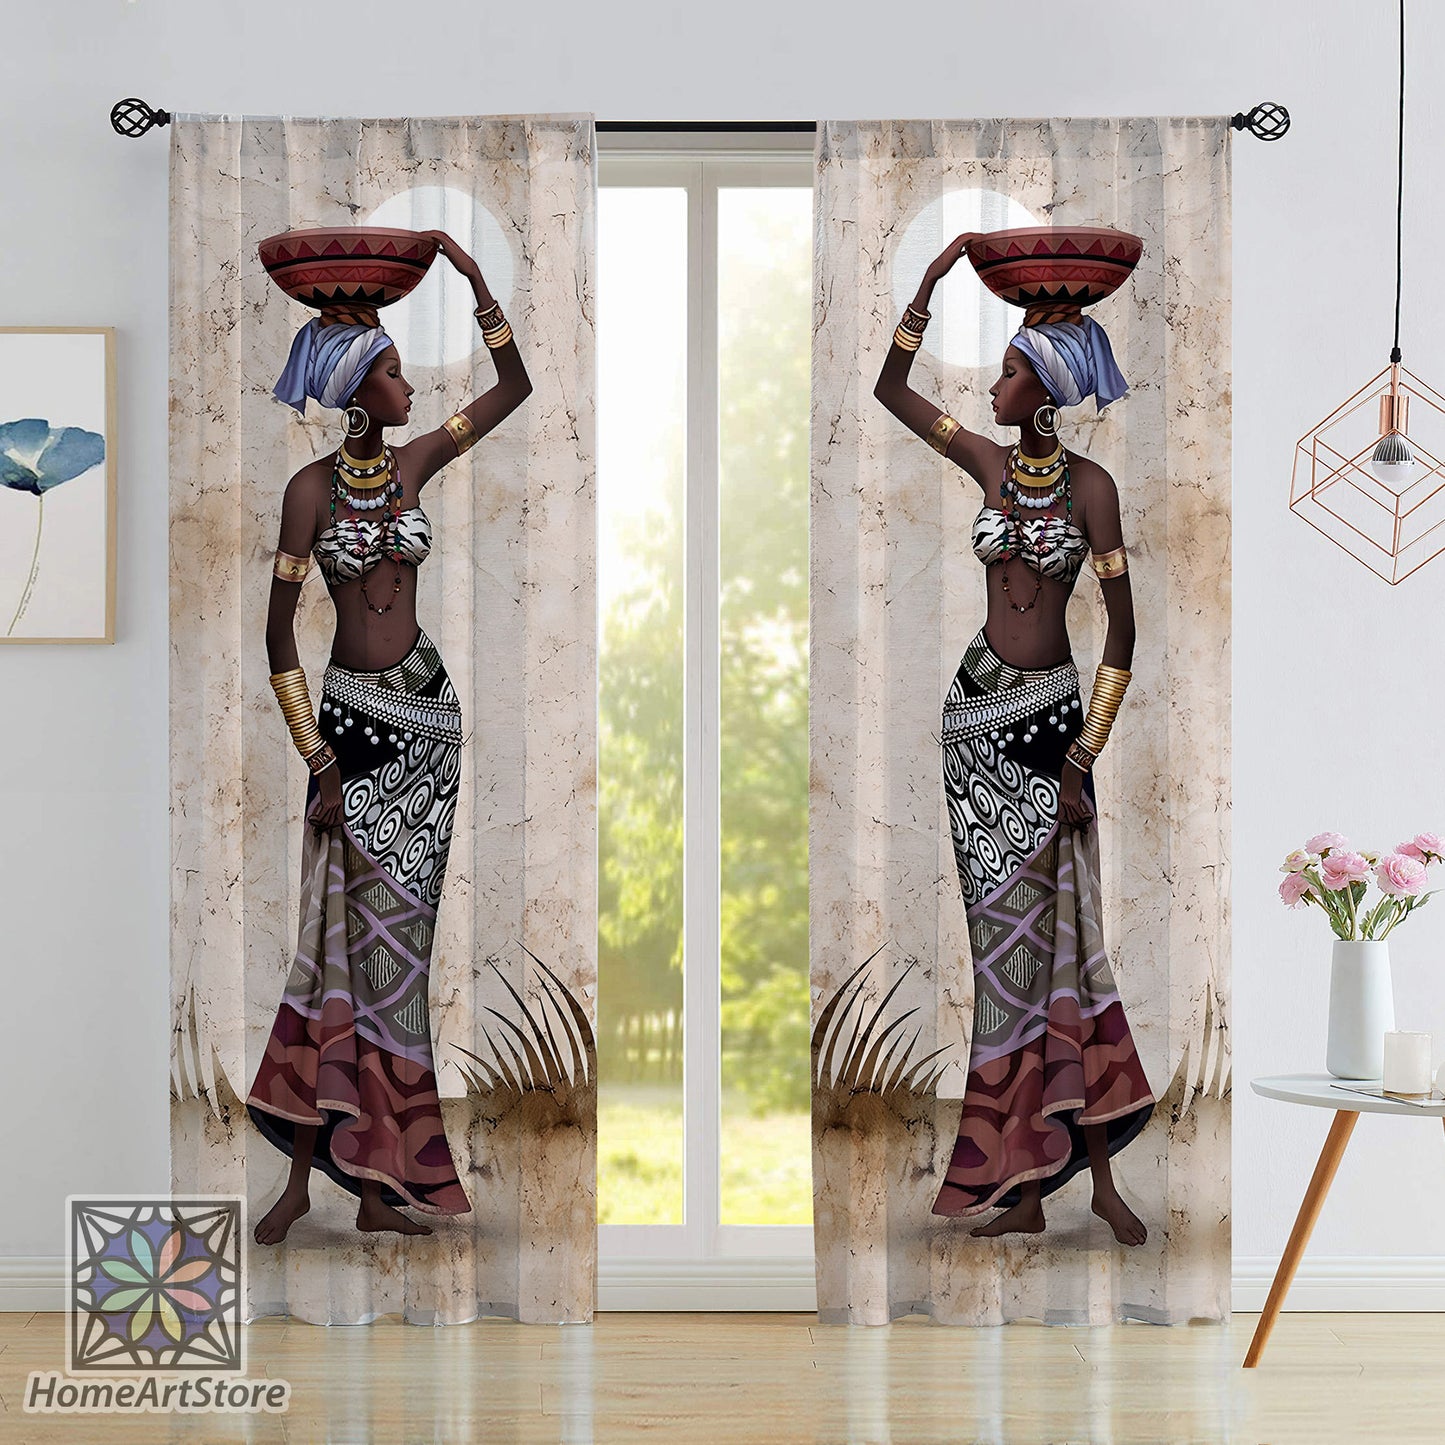 African Woman Blackout Curtain - Tribal Home Decor, Living Room Curtain, Vintage Women-Themed Curtain